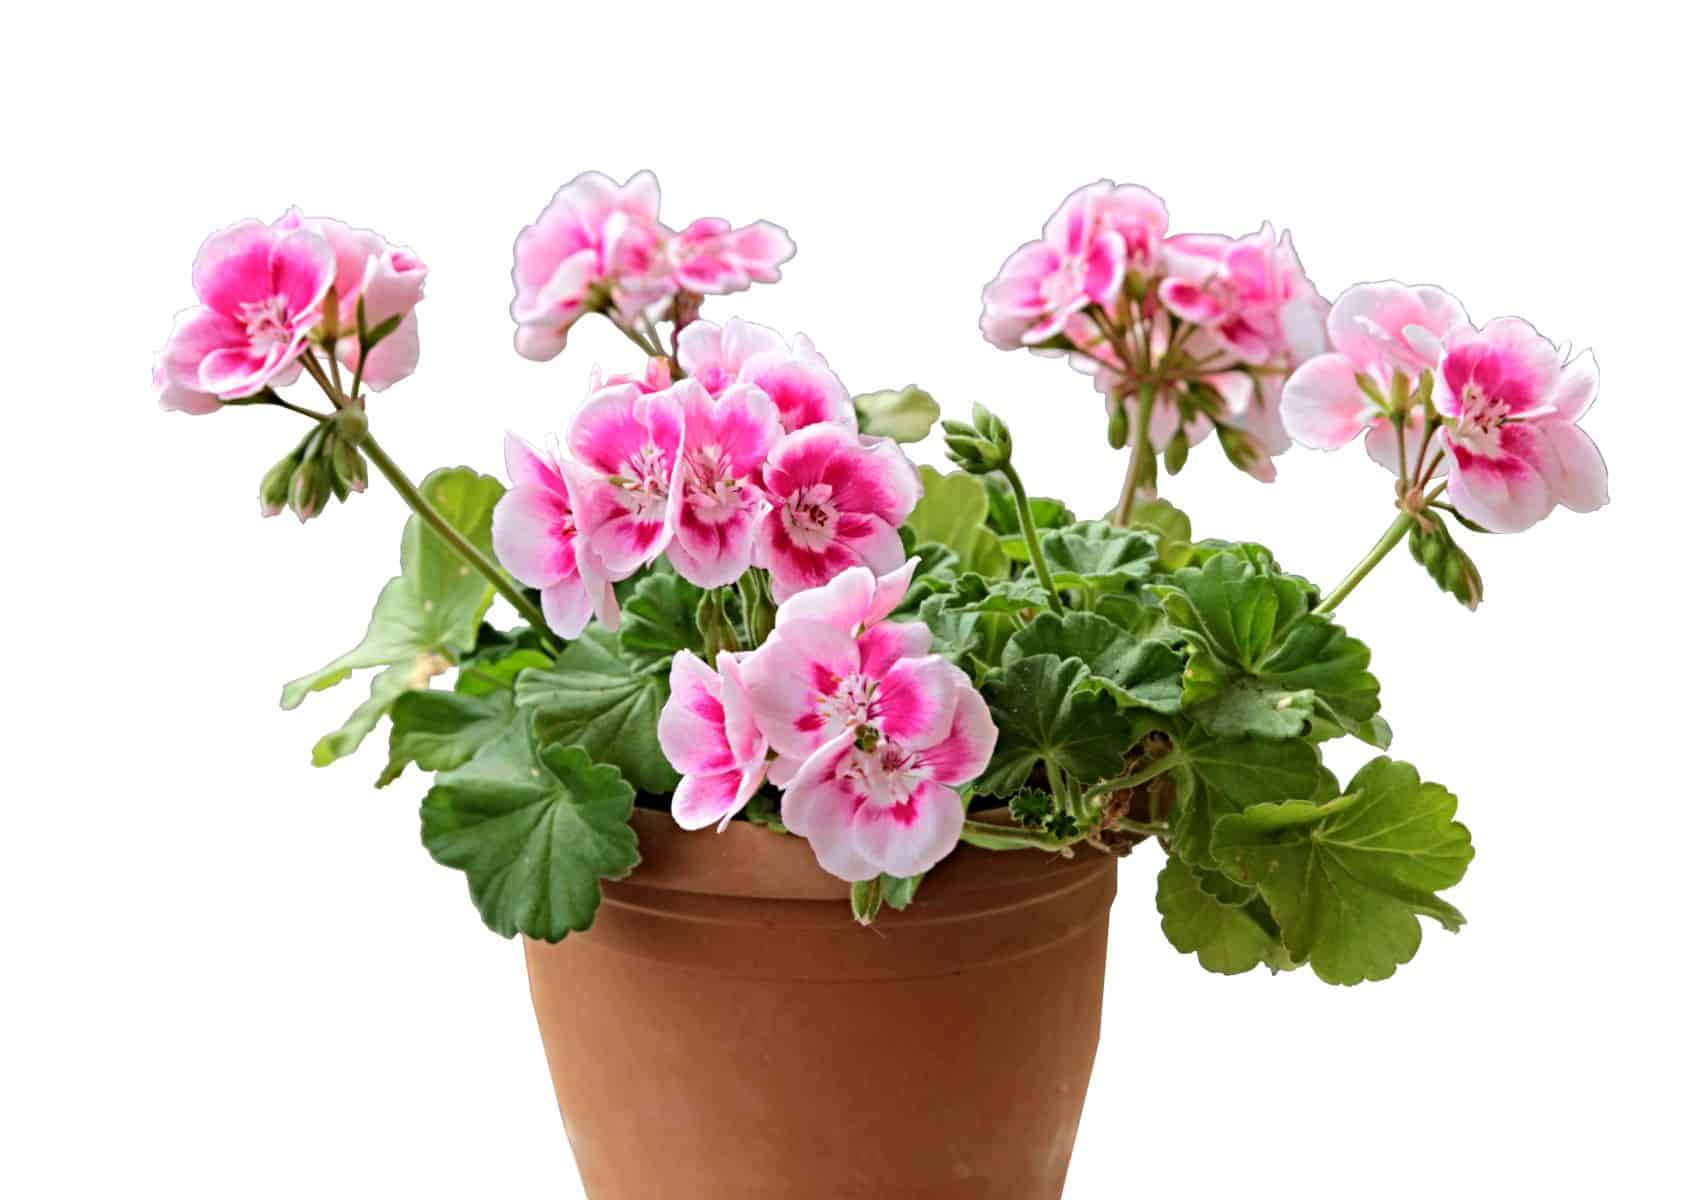 Geranium   care in spring, summer and winter